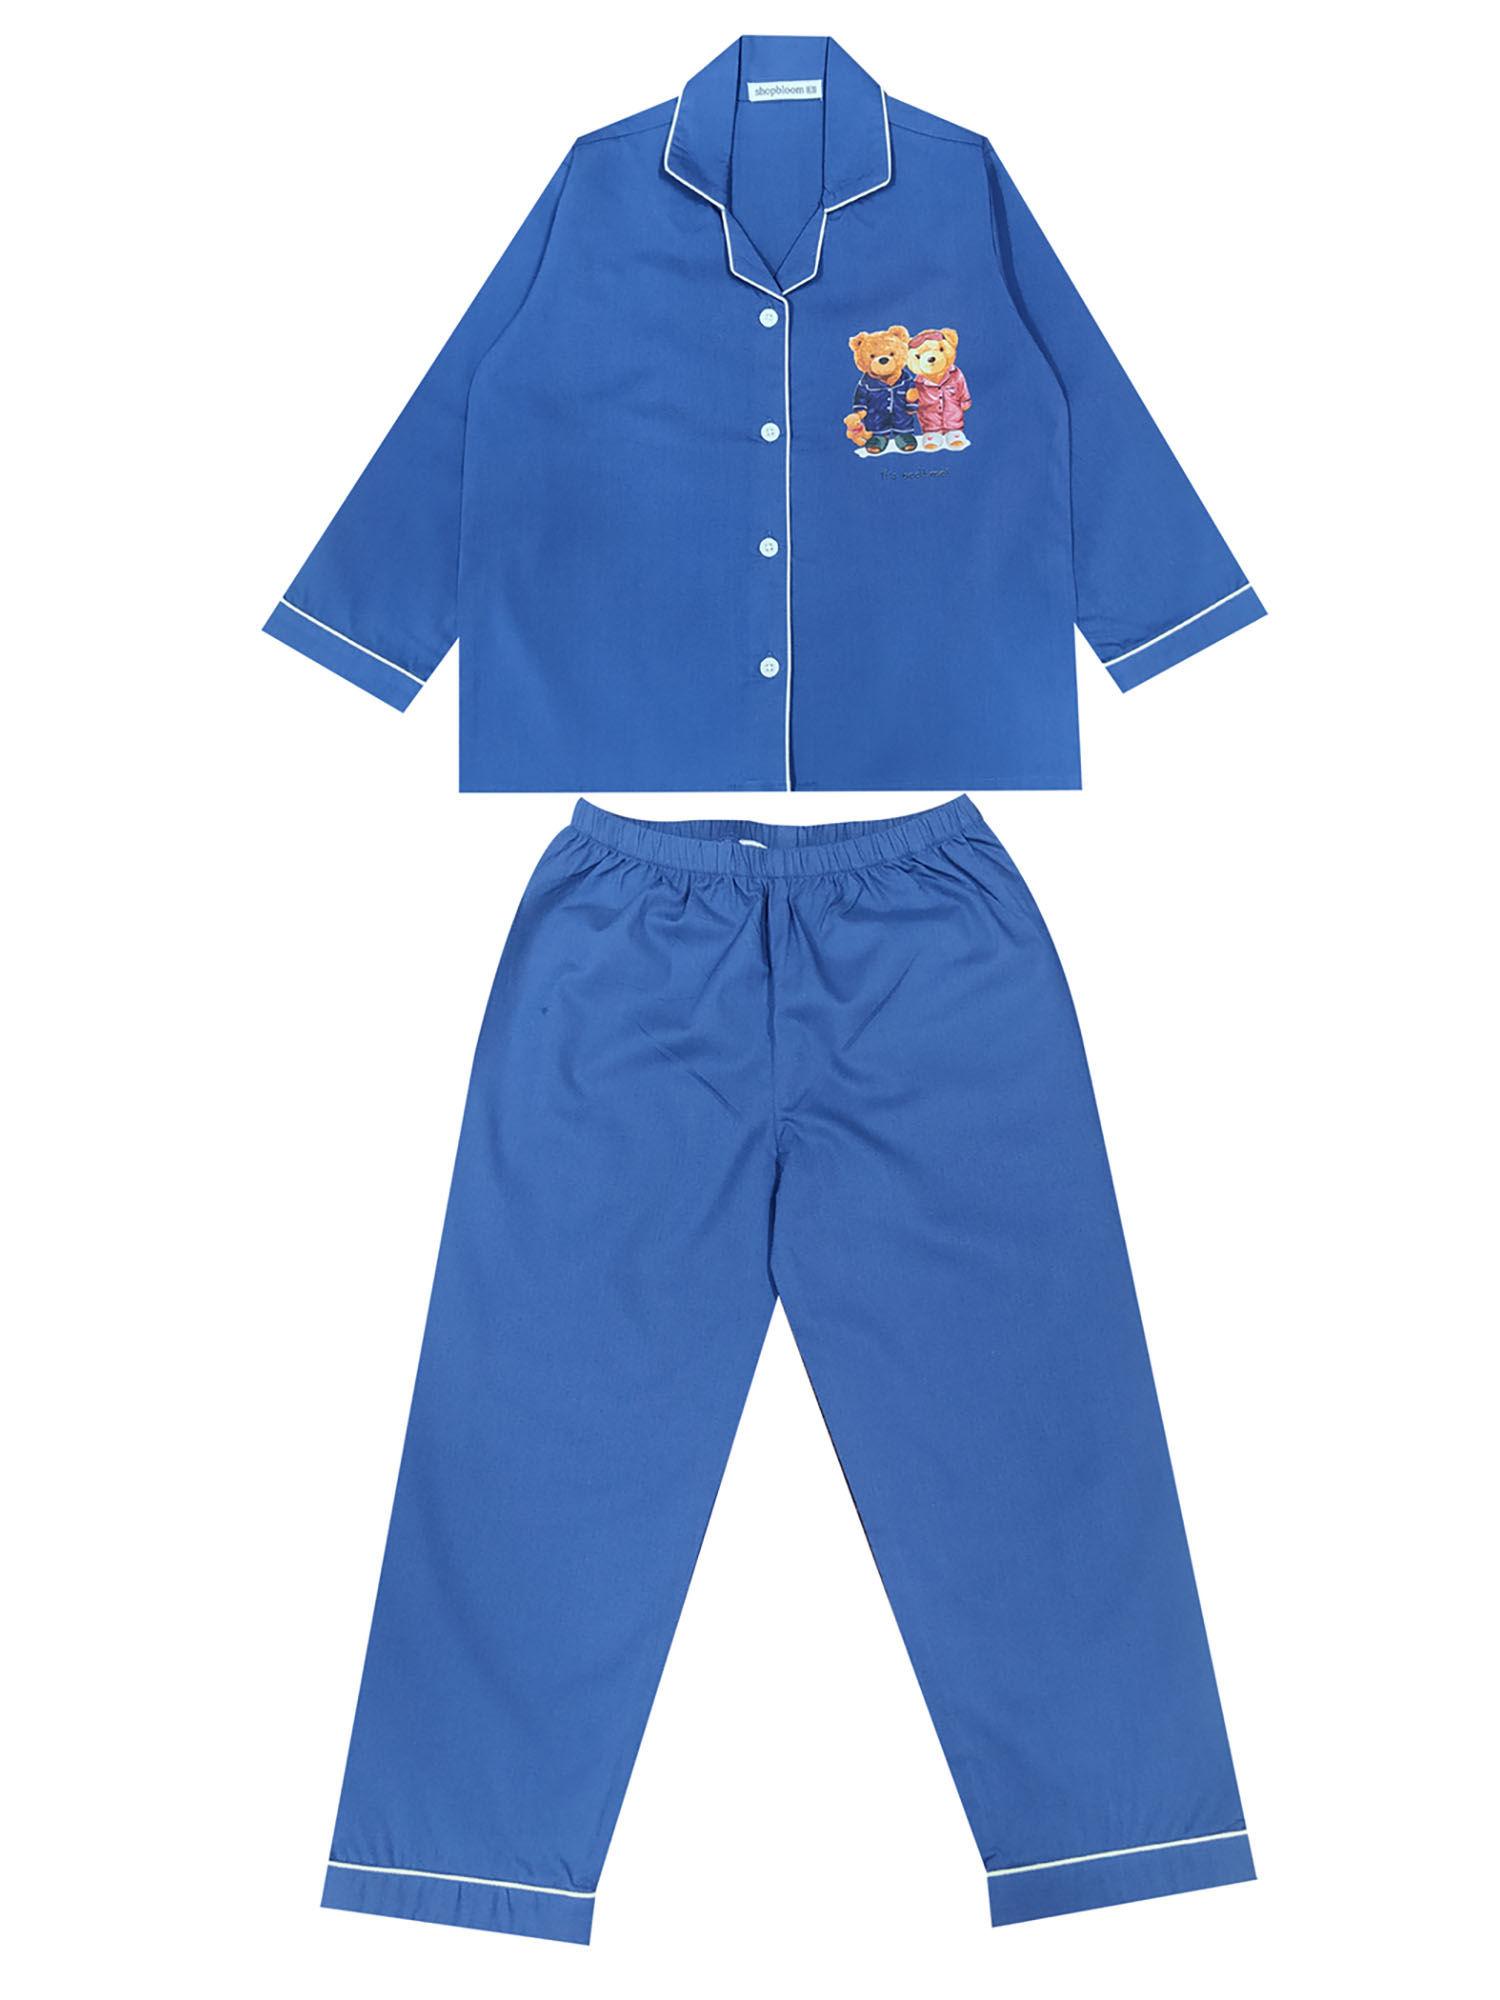 its bedtime teddy navy long sleeve kids night suit (set of 2)